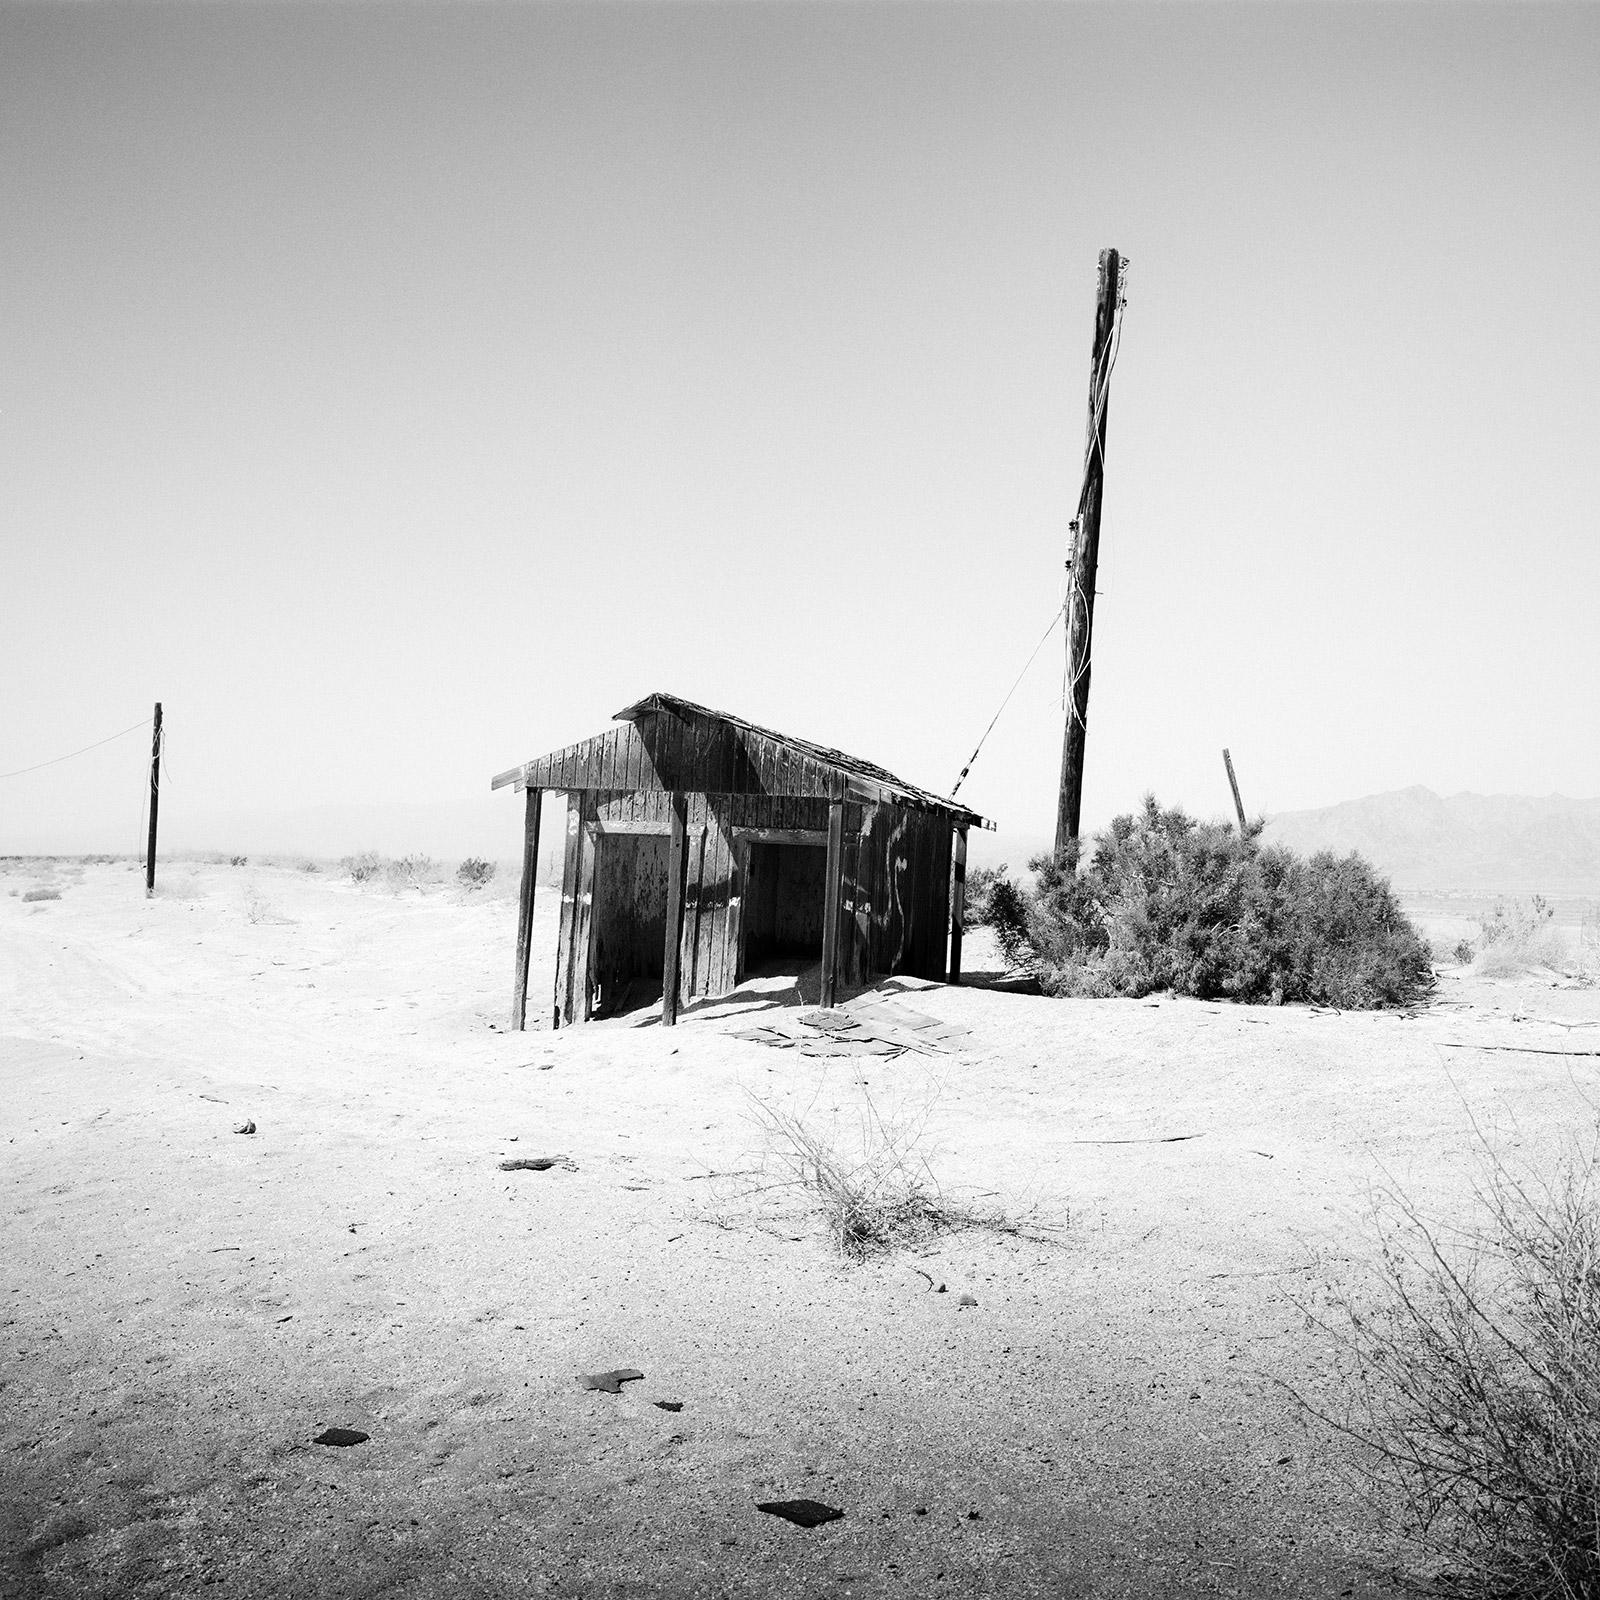 Abandoned Hut, desert, California, USA, black and white photography, landscape